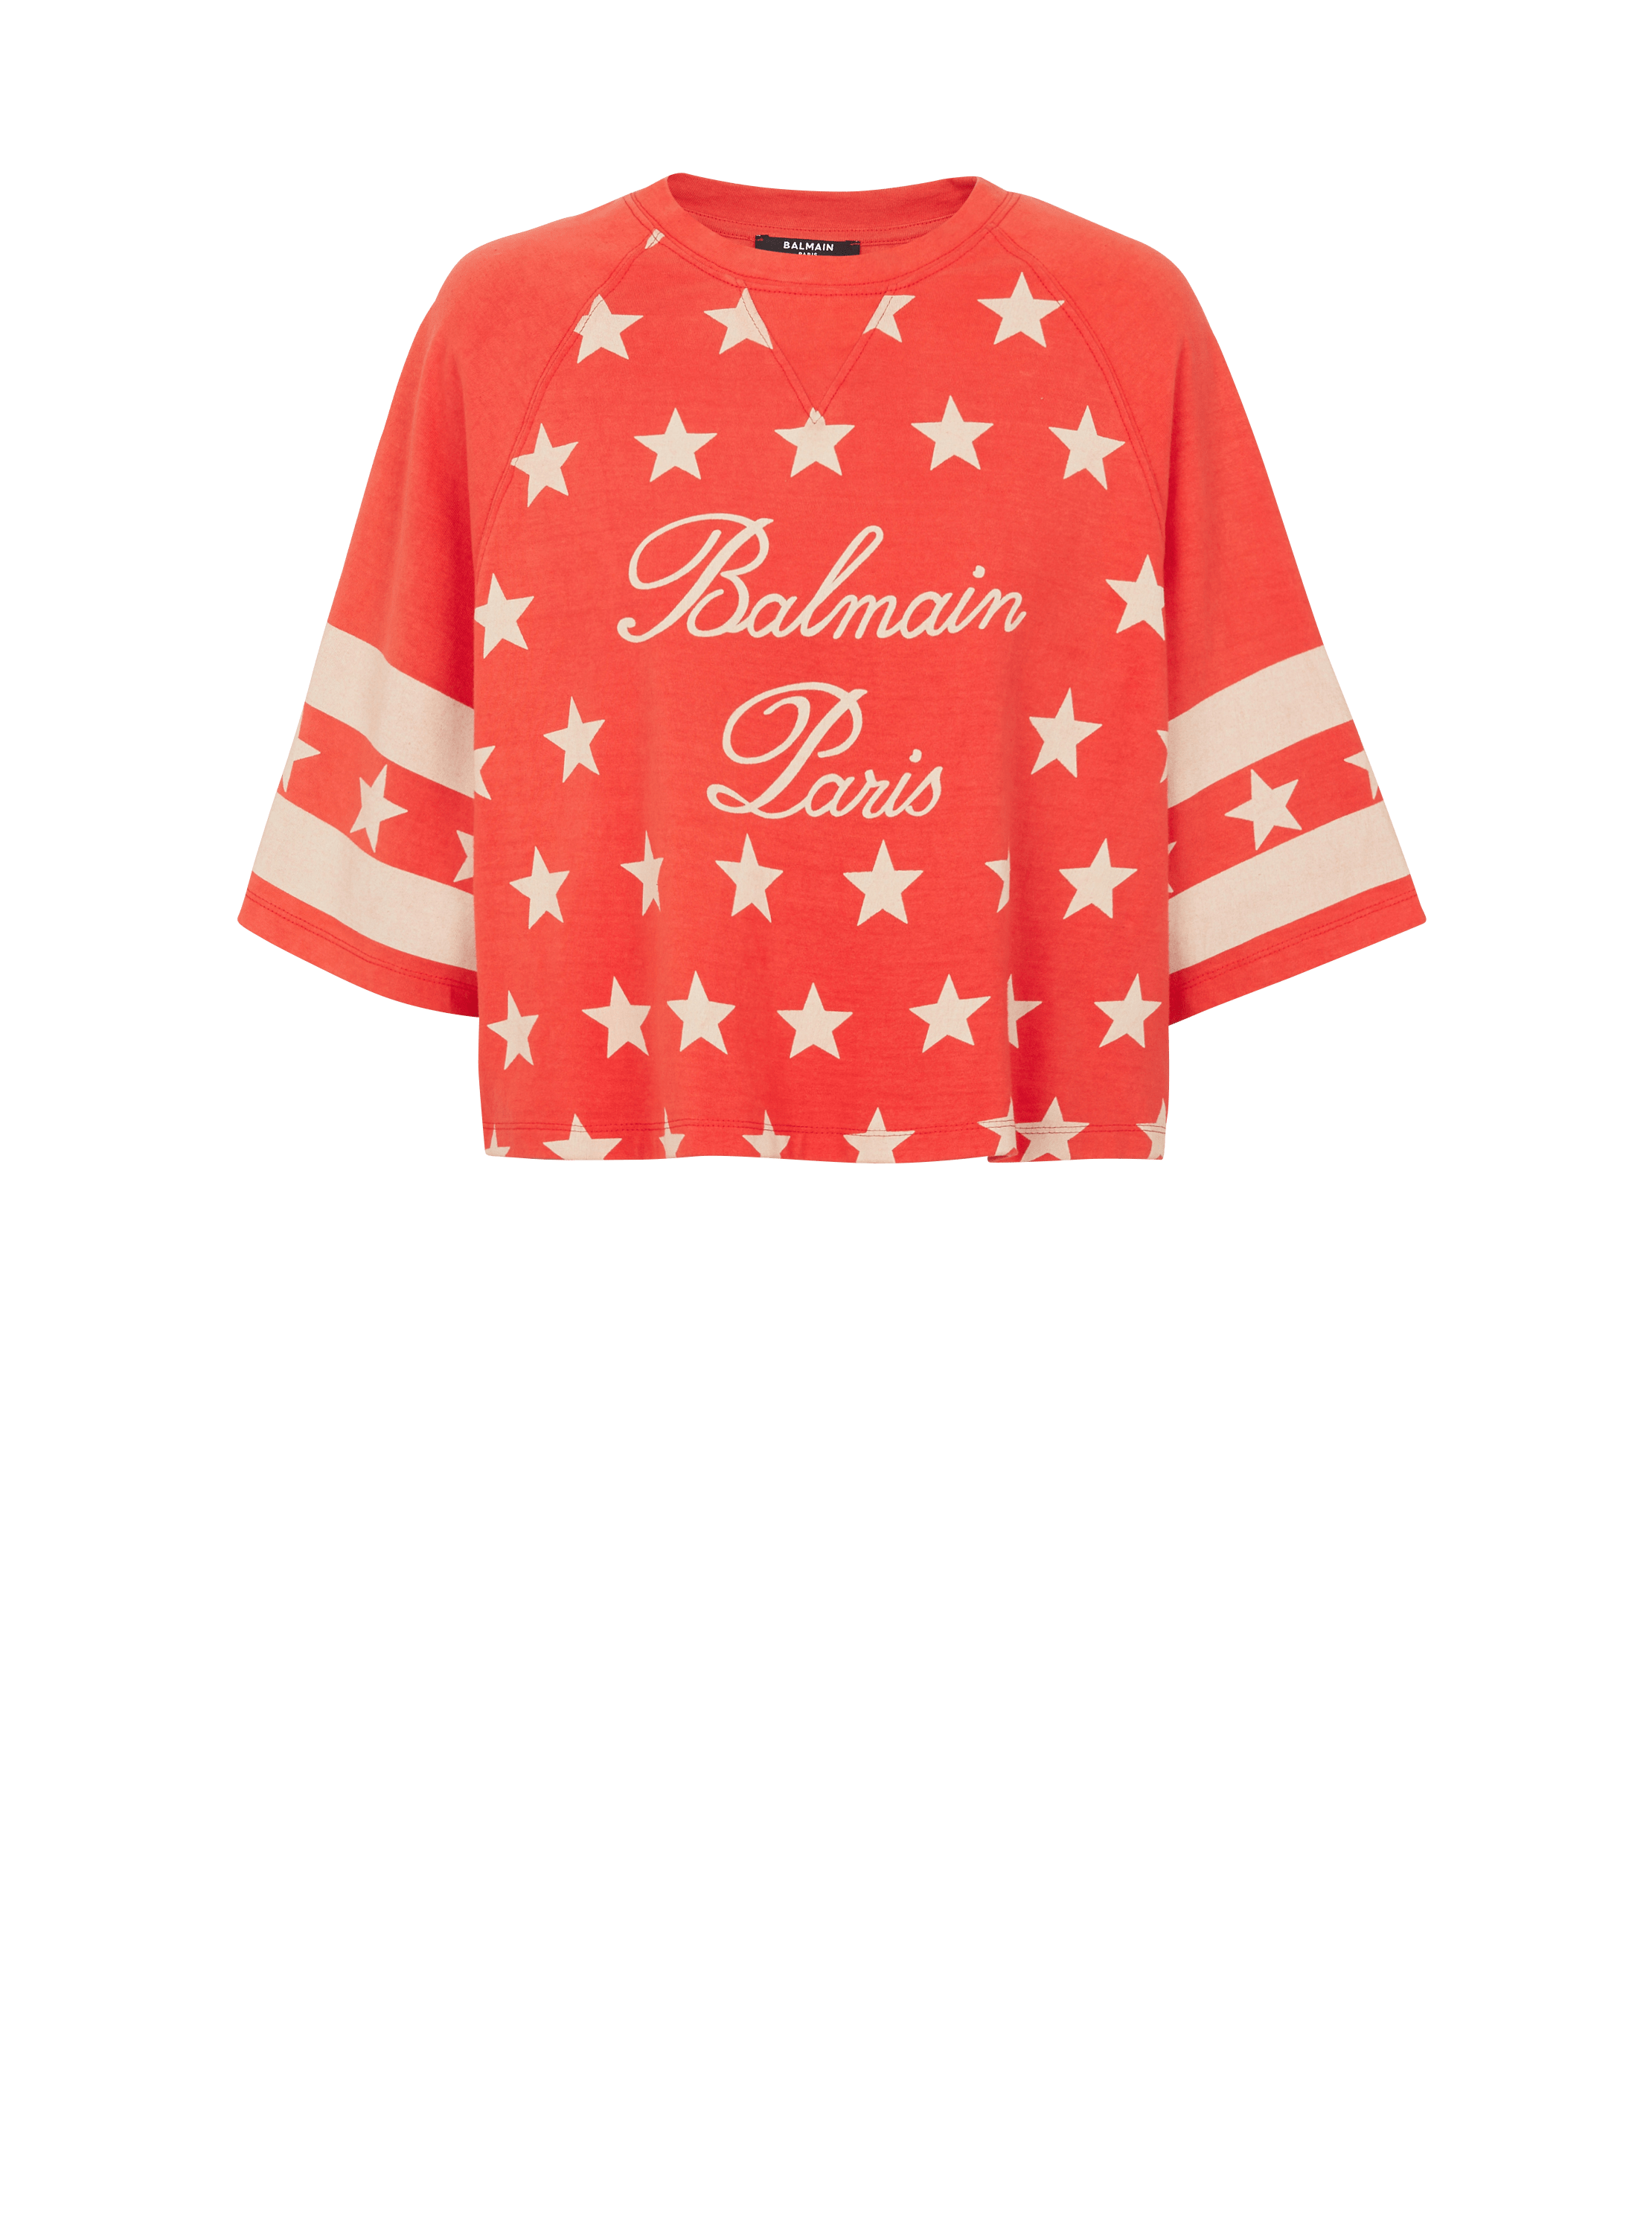 Camiseta Balmain Signature estrellas, rojo, hi-res